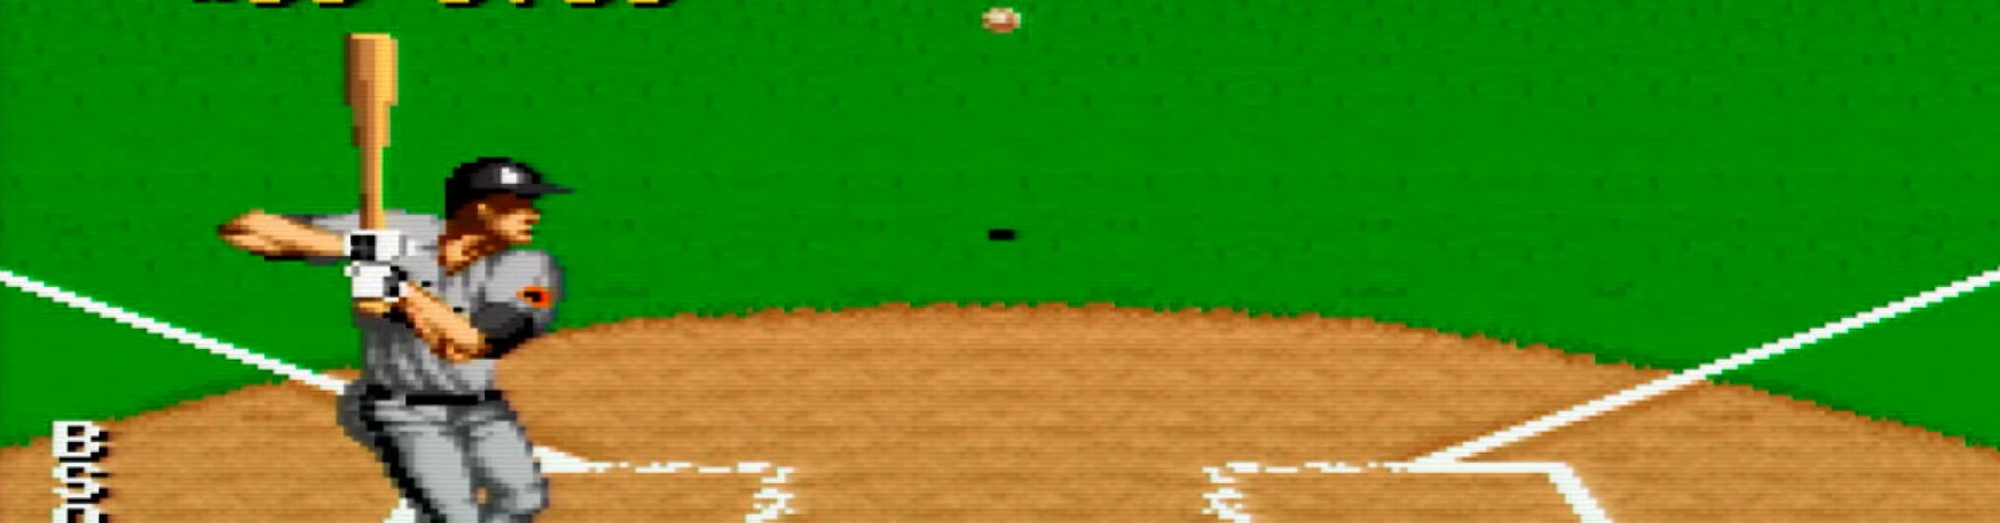 Ken Griffey Jr Presents Major League Baseball SNES 2